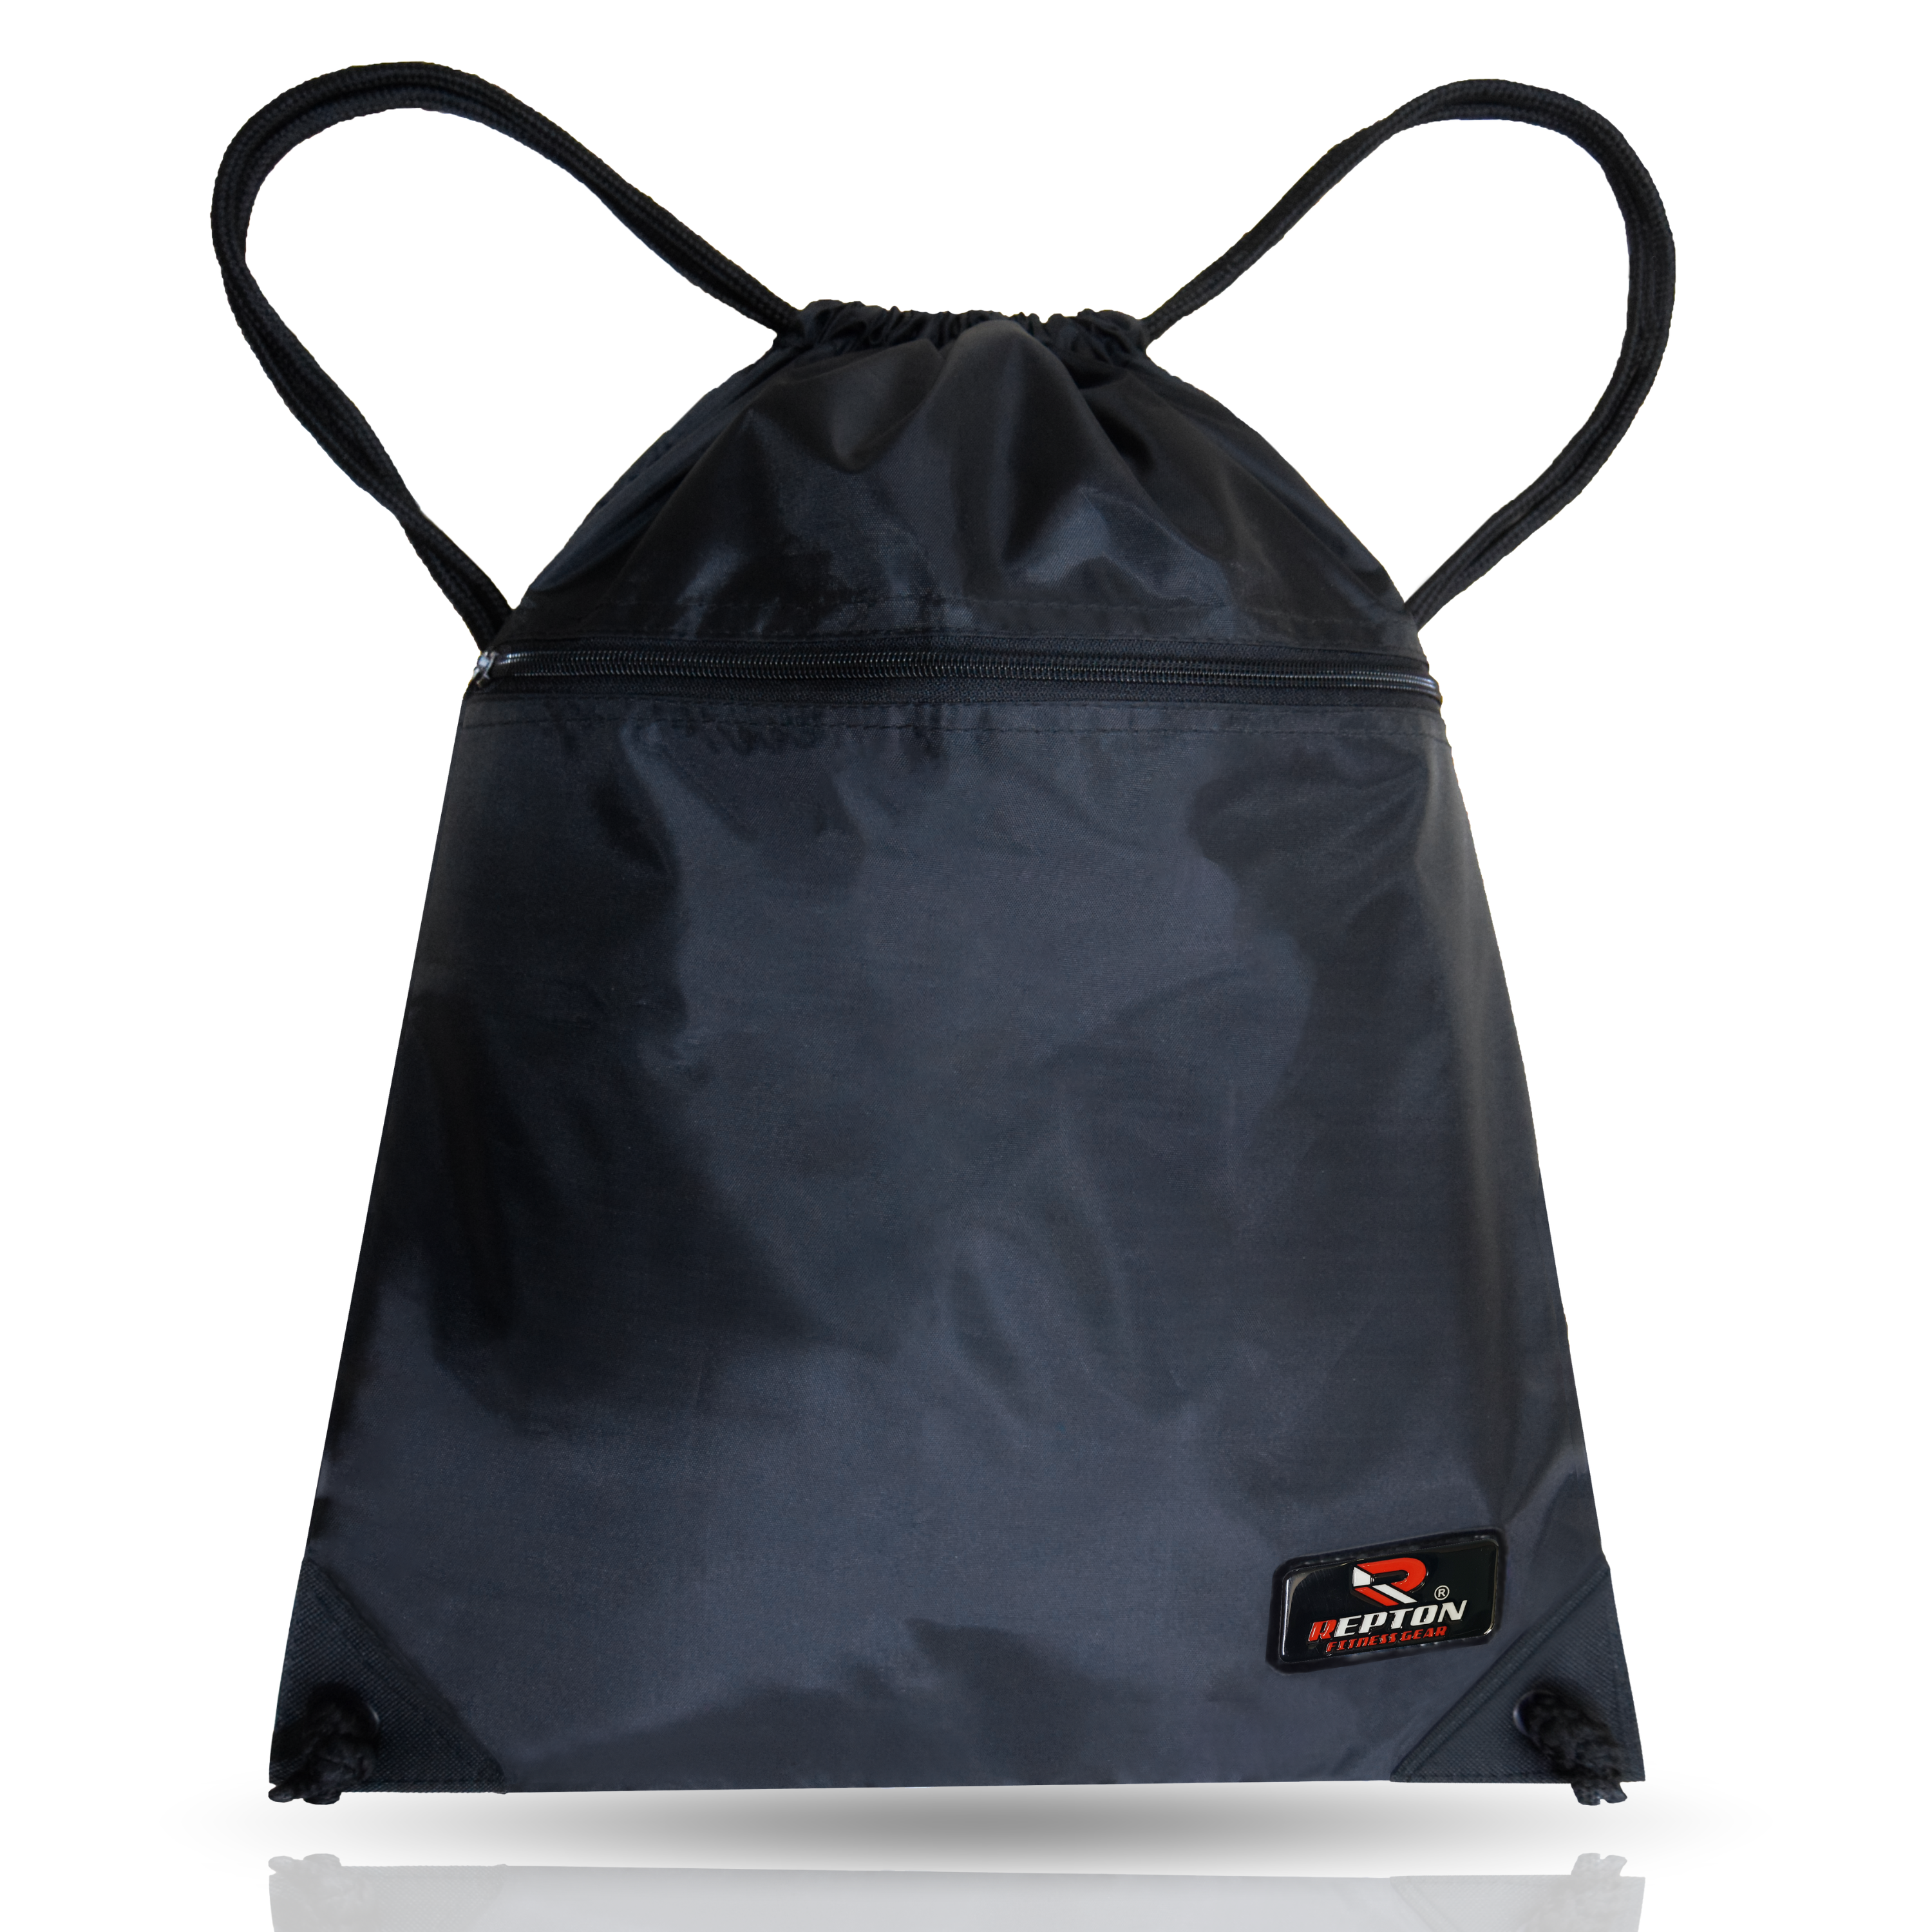 Drawstring Bag Gym Sack Repton Fitness Gear